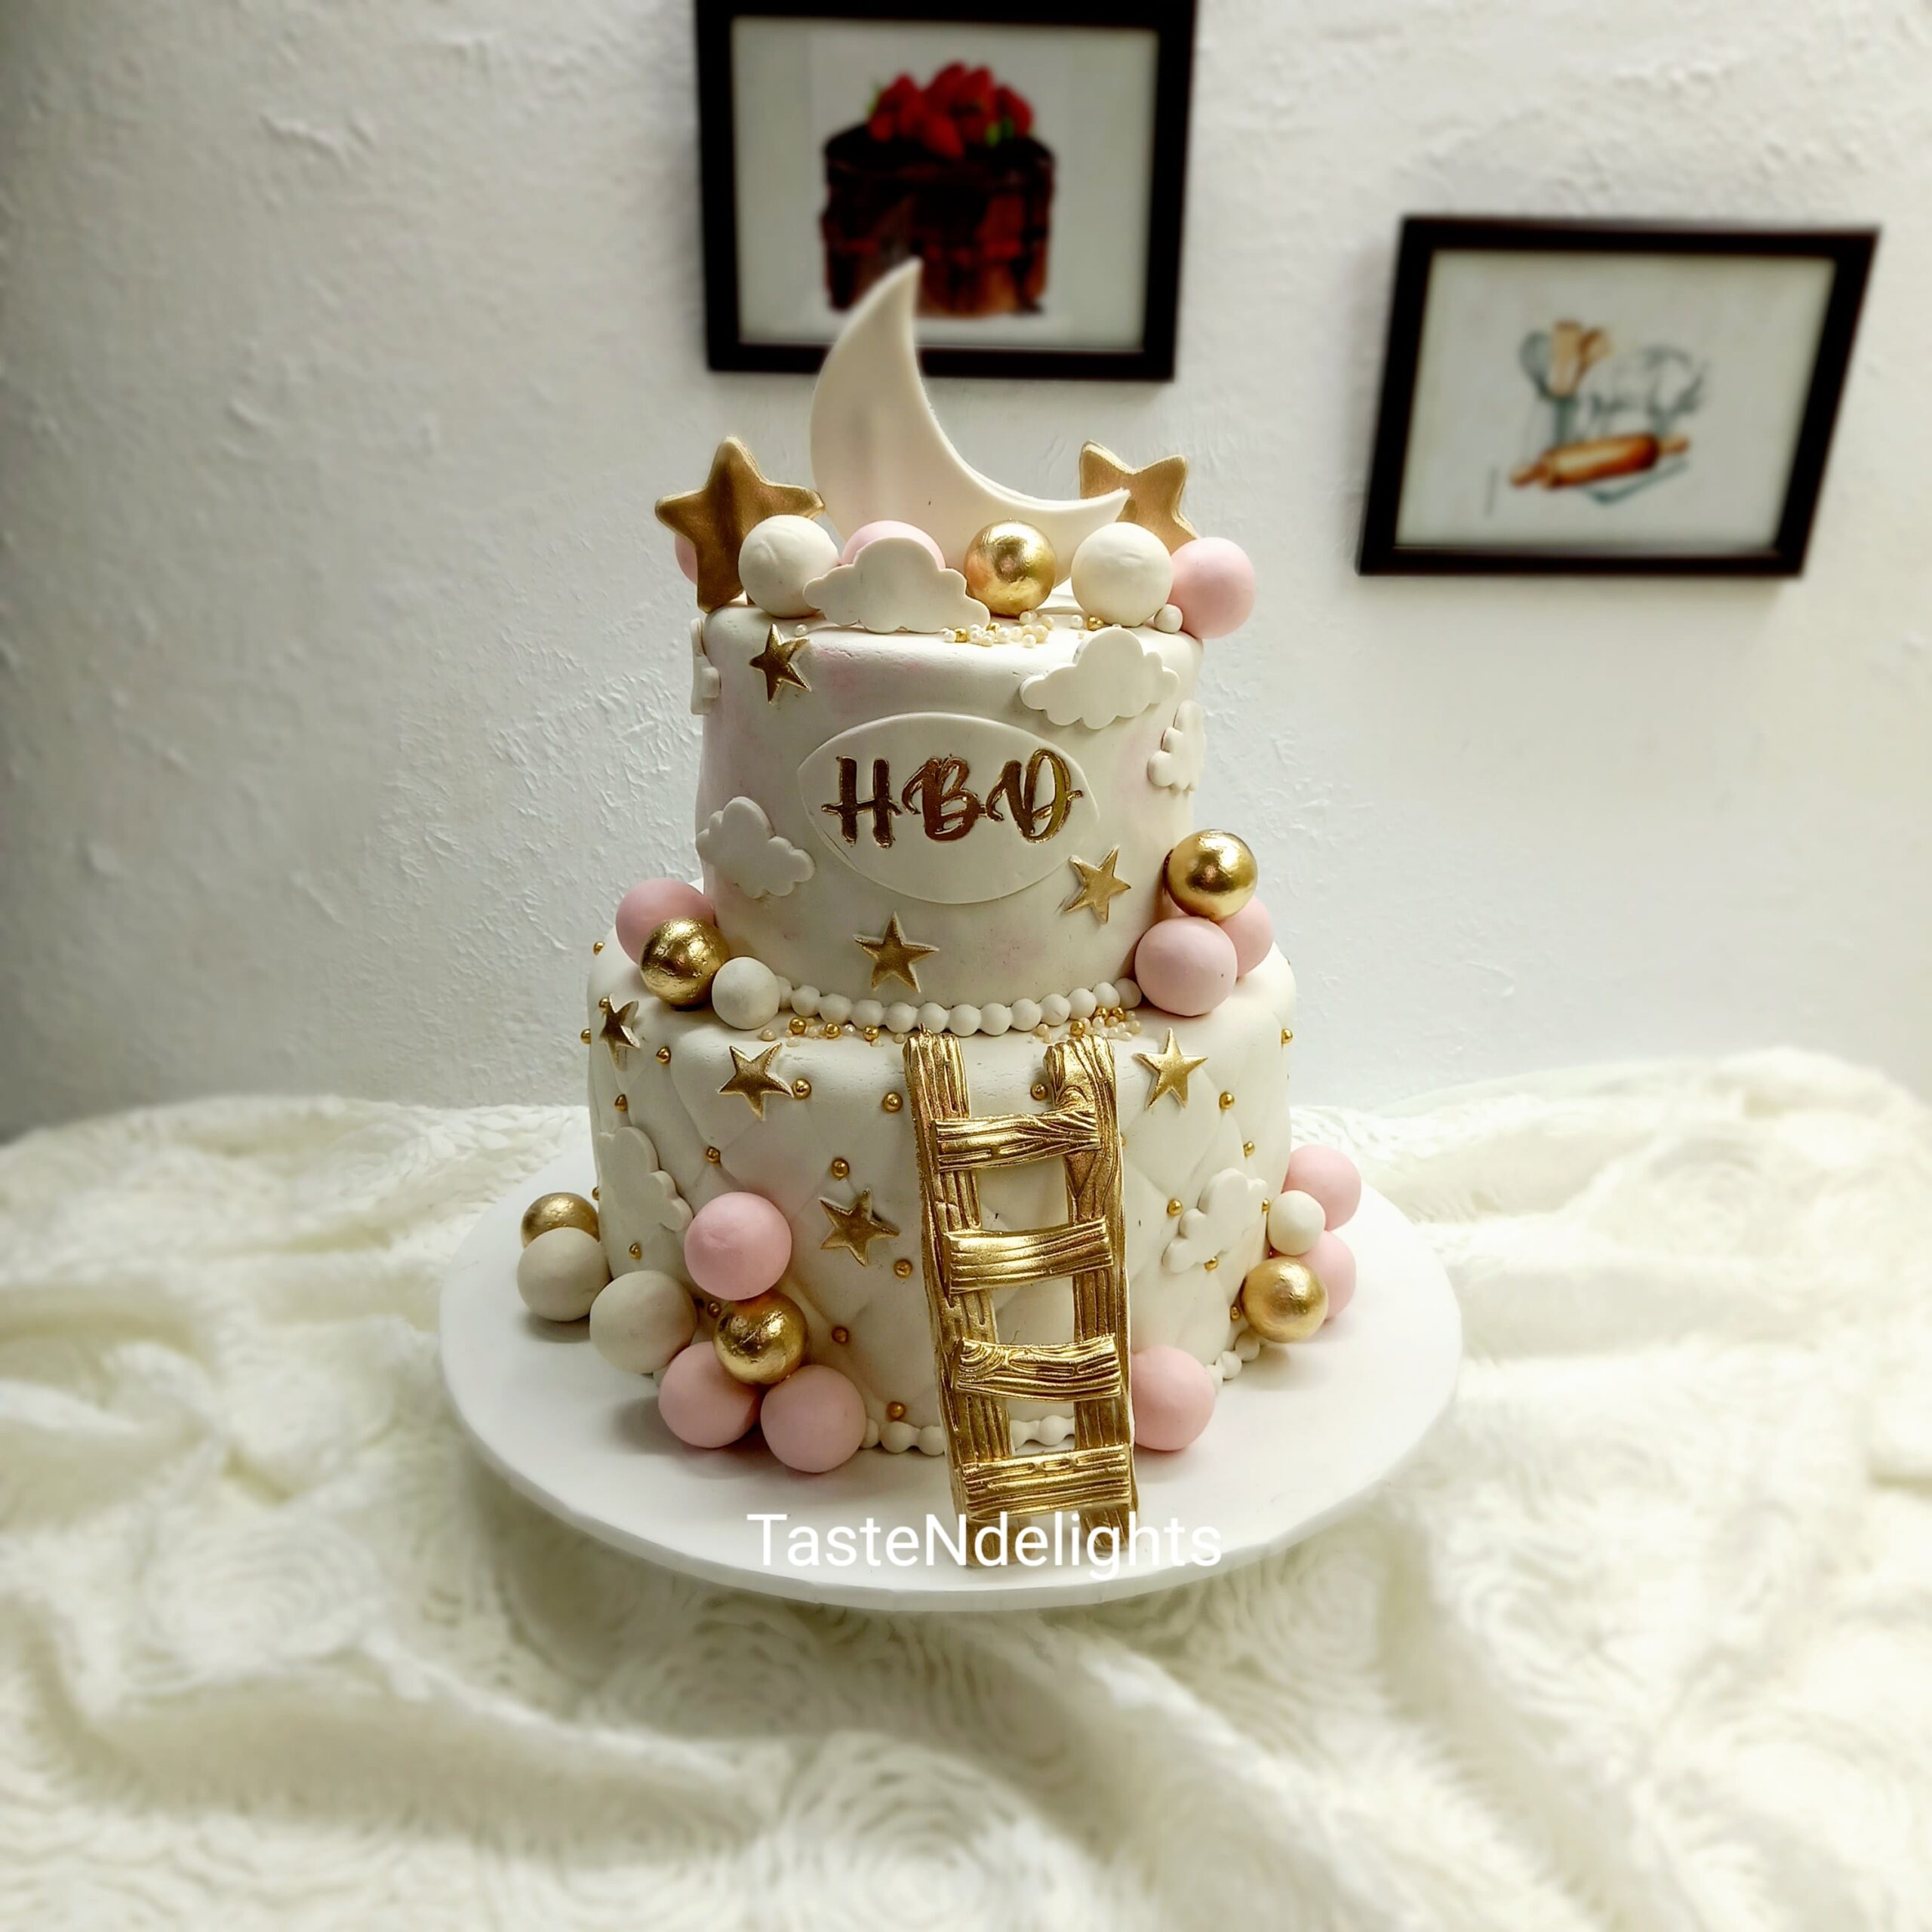 Easiest Vanilla Birthday Cake with Vanilla Buttercream - Veena Azmanov